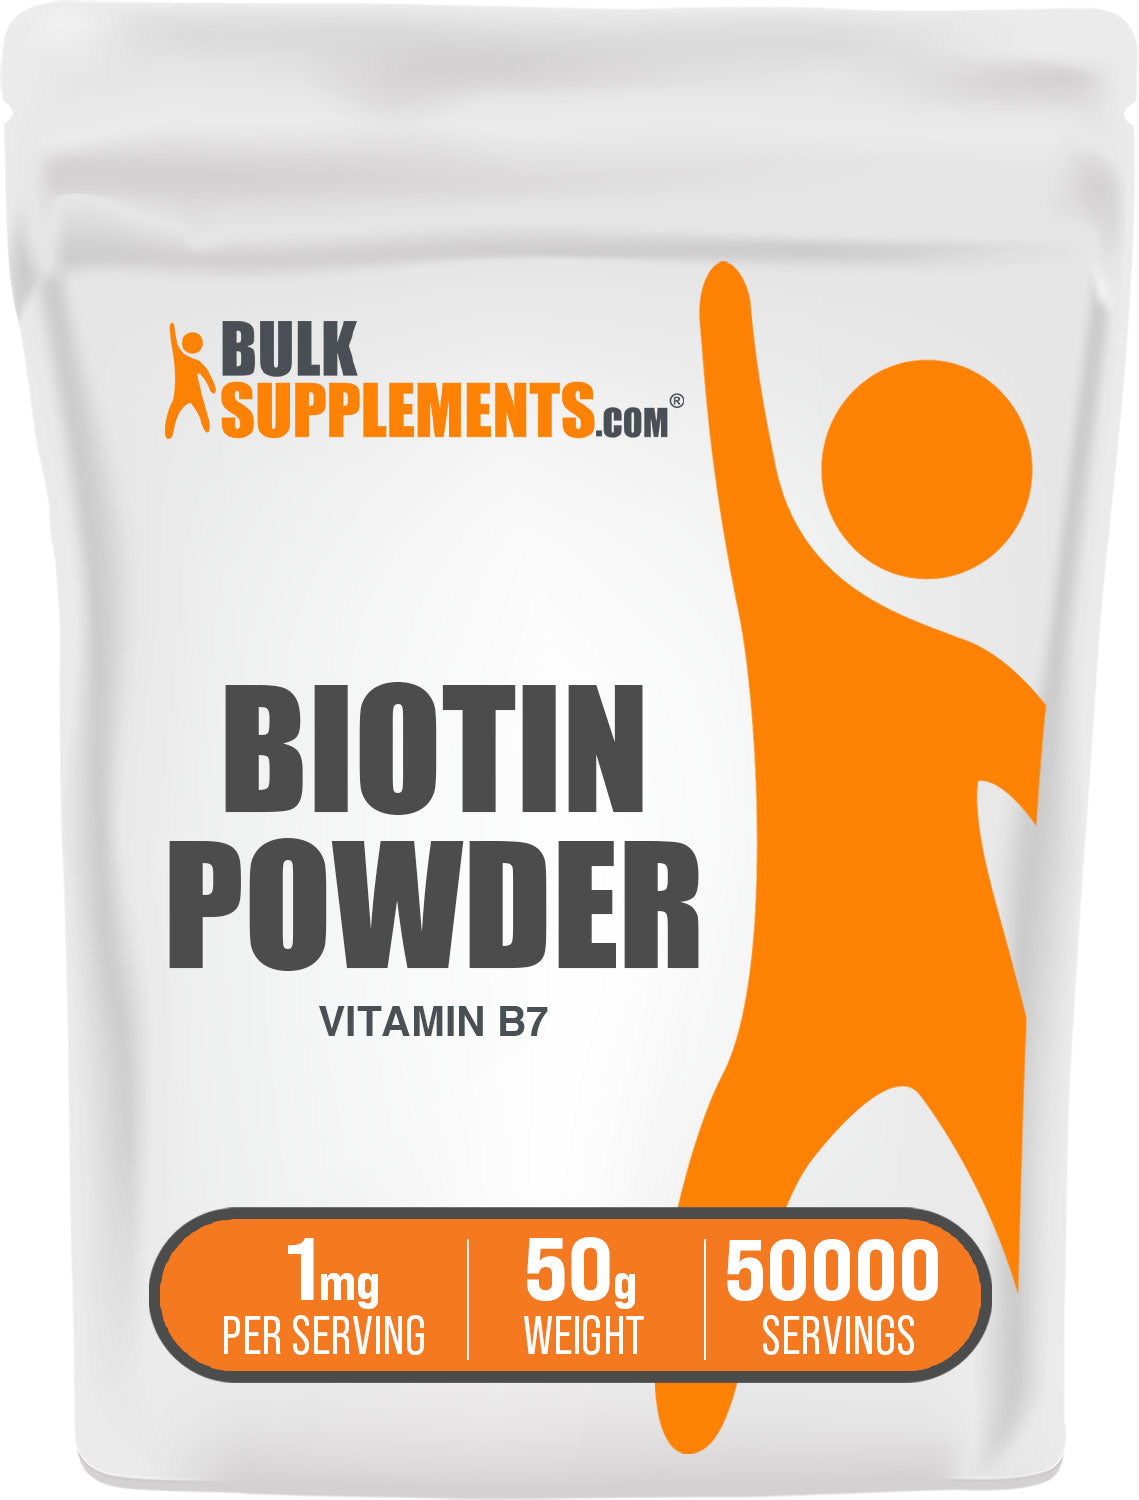 BulkSupplements Biotin Powder Vitamin B7 50g bag